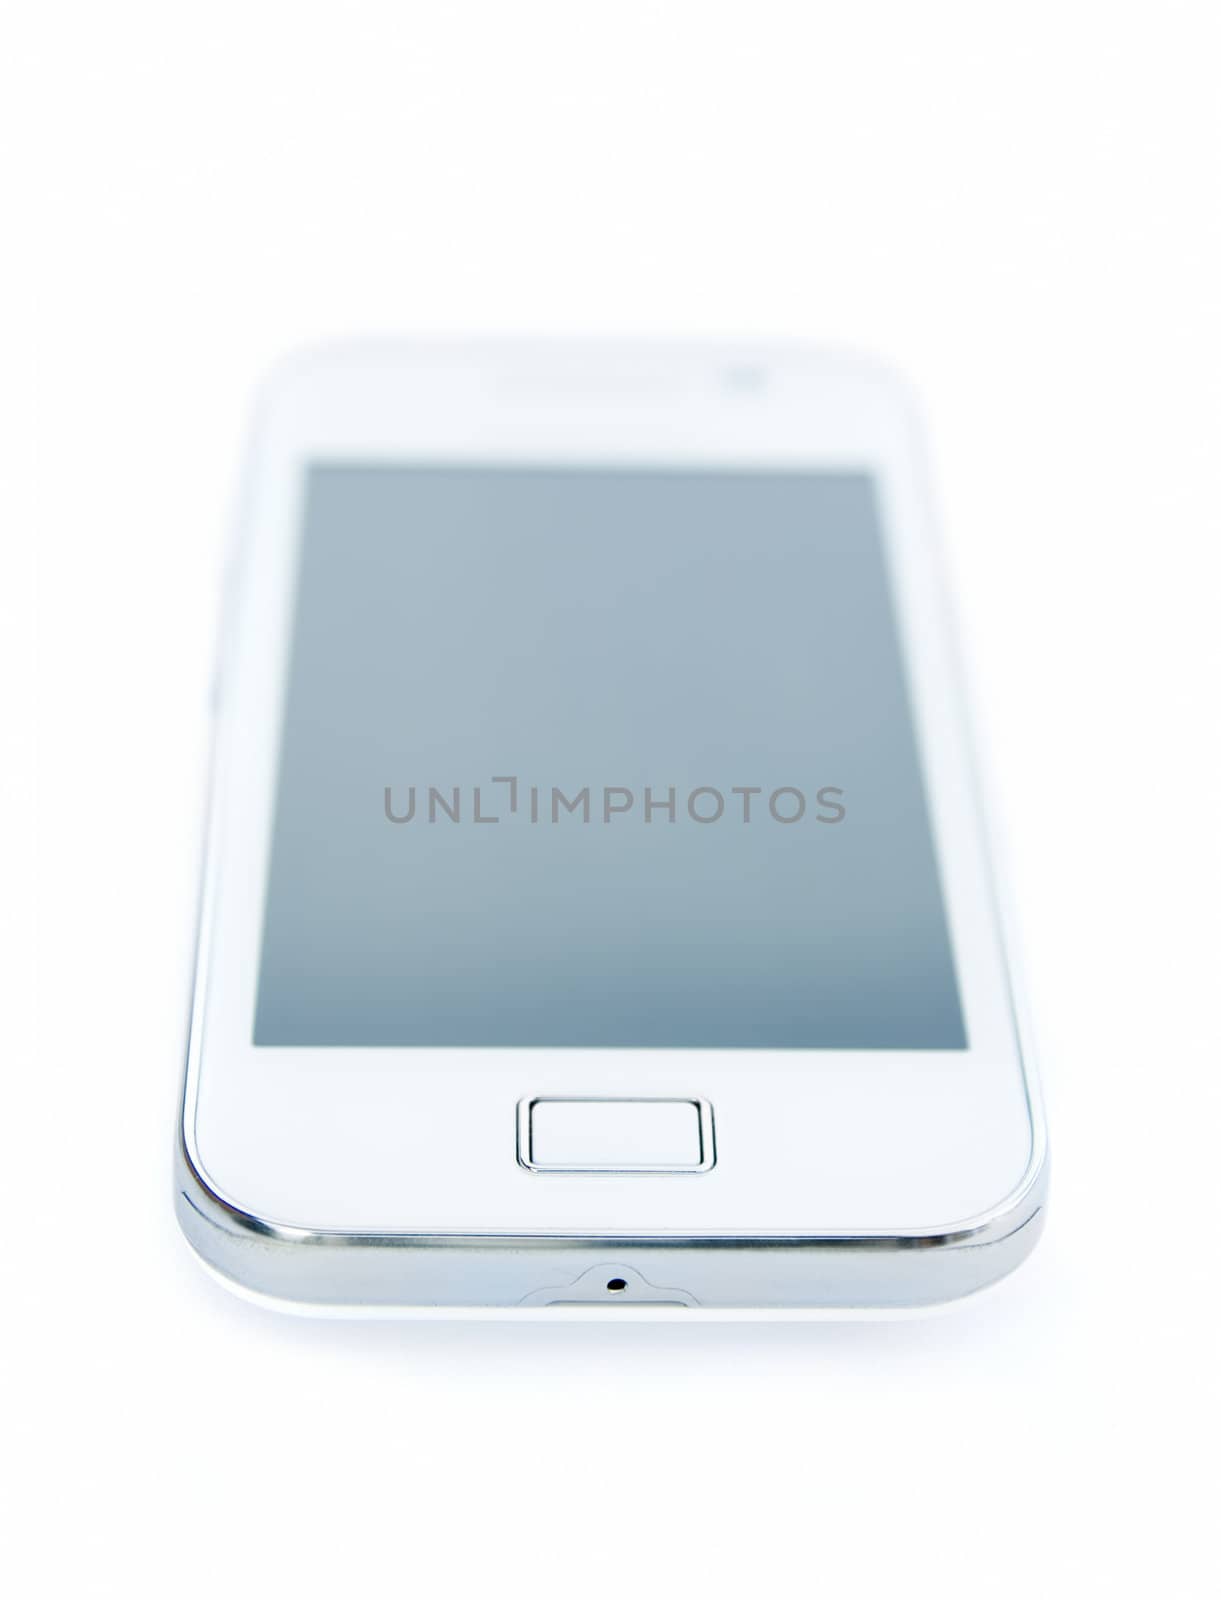 soft focus white smartphone on white background